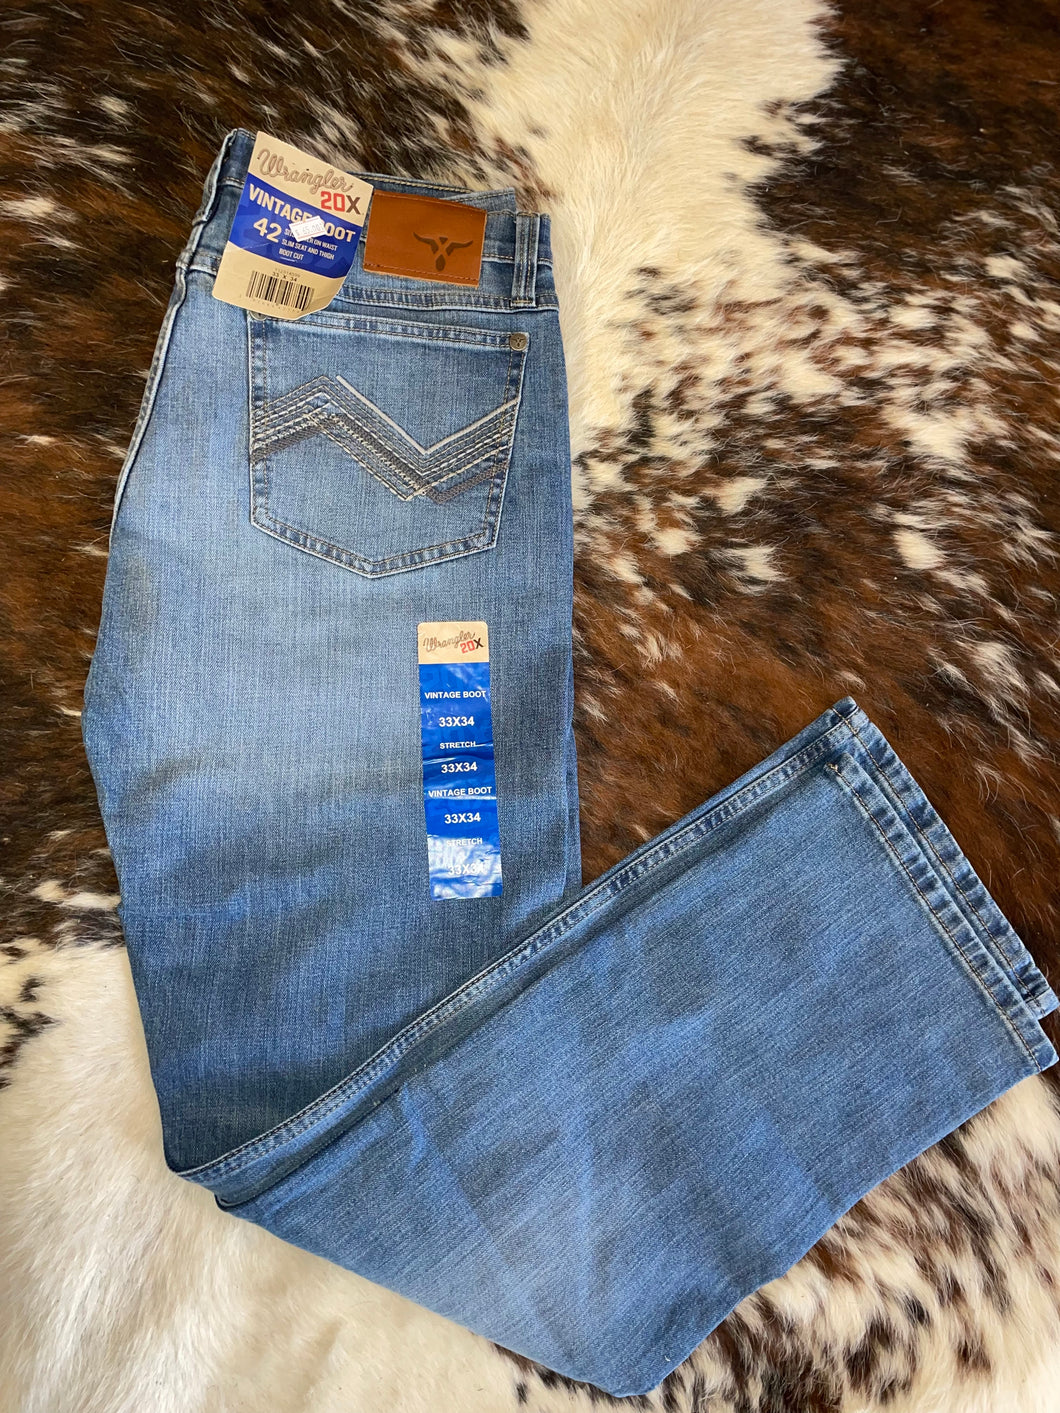 Men's Wrangler 20X Vintage Boot Jeans